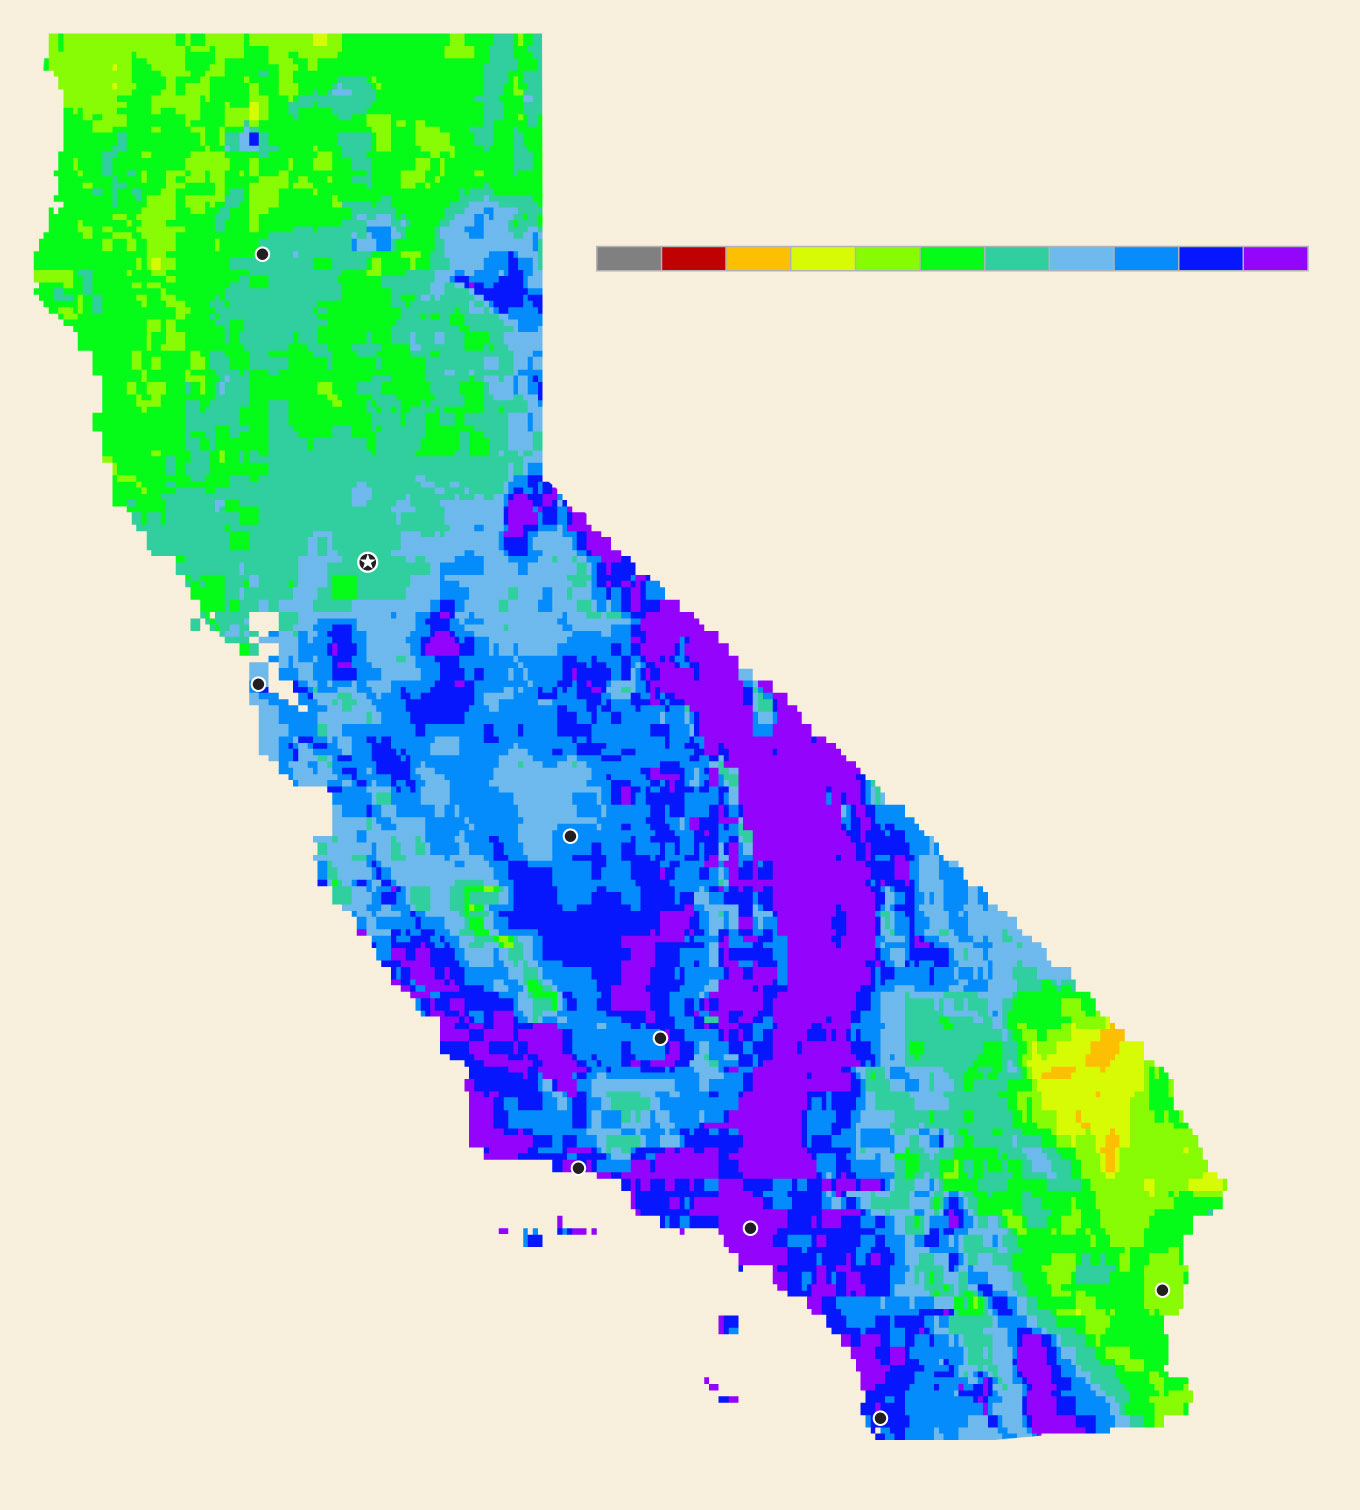 Map shows total precipitation percentages for California.